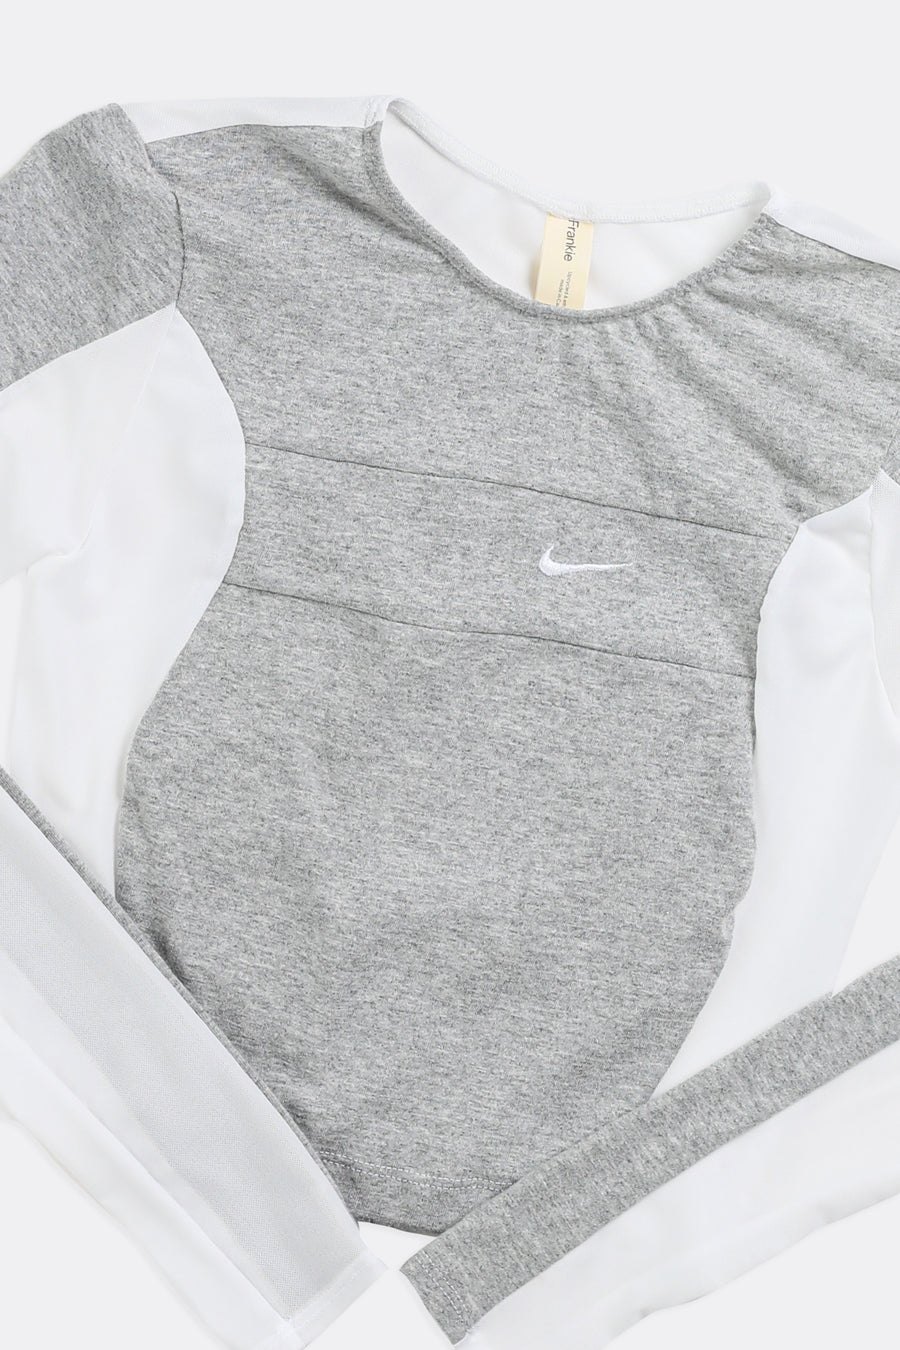 Rework Nike Wave Mesh Long Sleeve Top - S